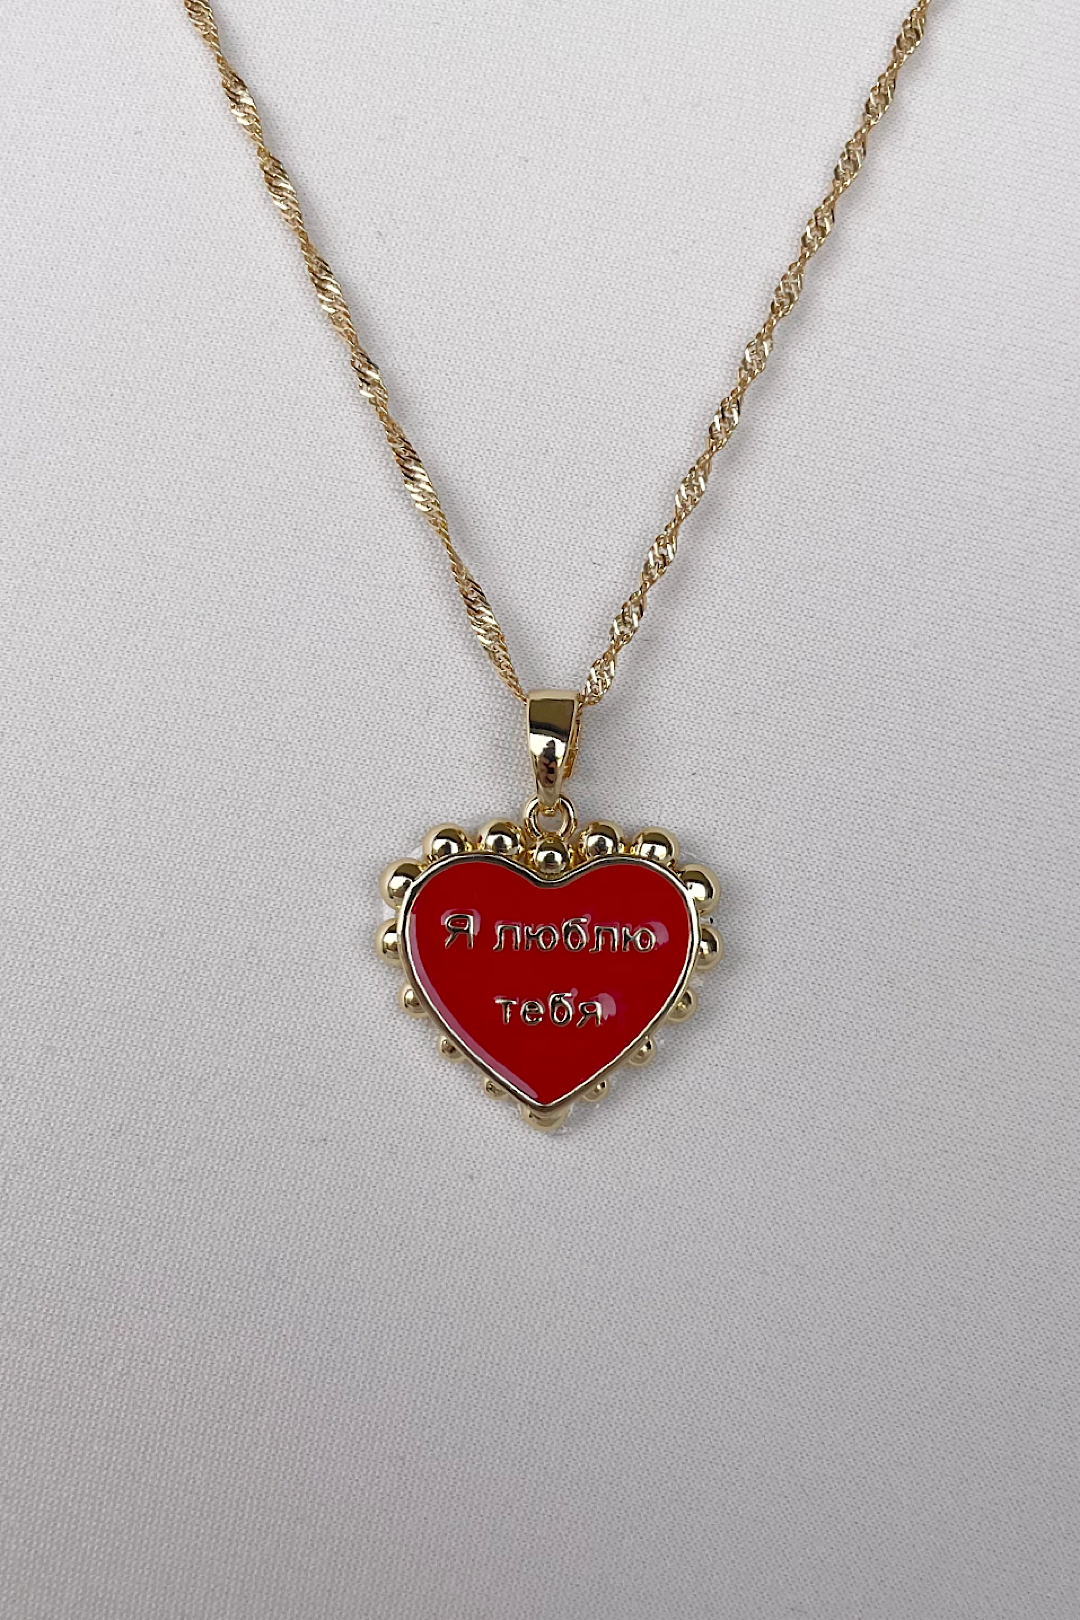 “Я люблю тебя” heart necklace